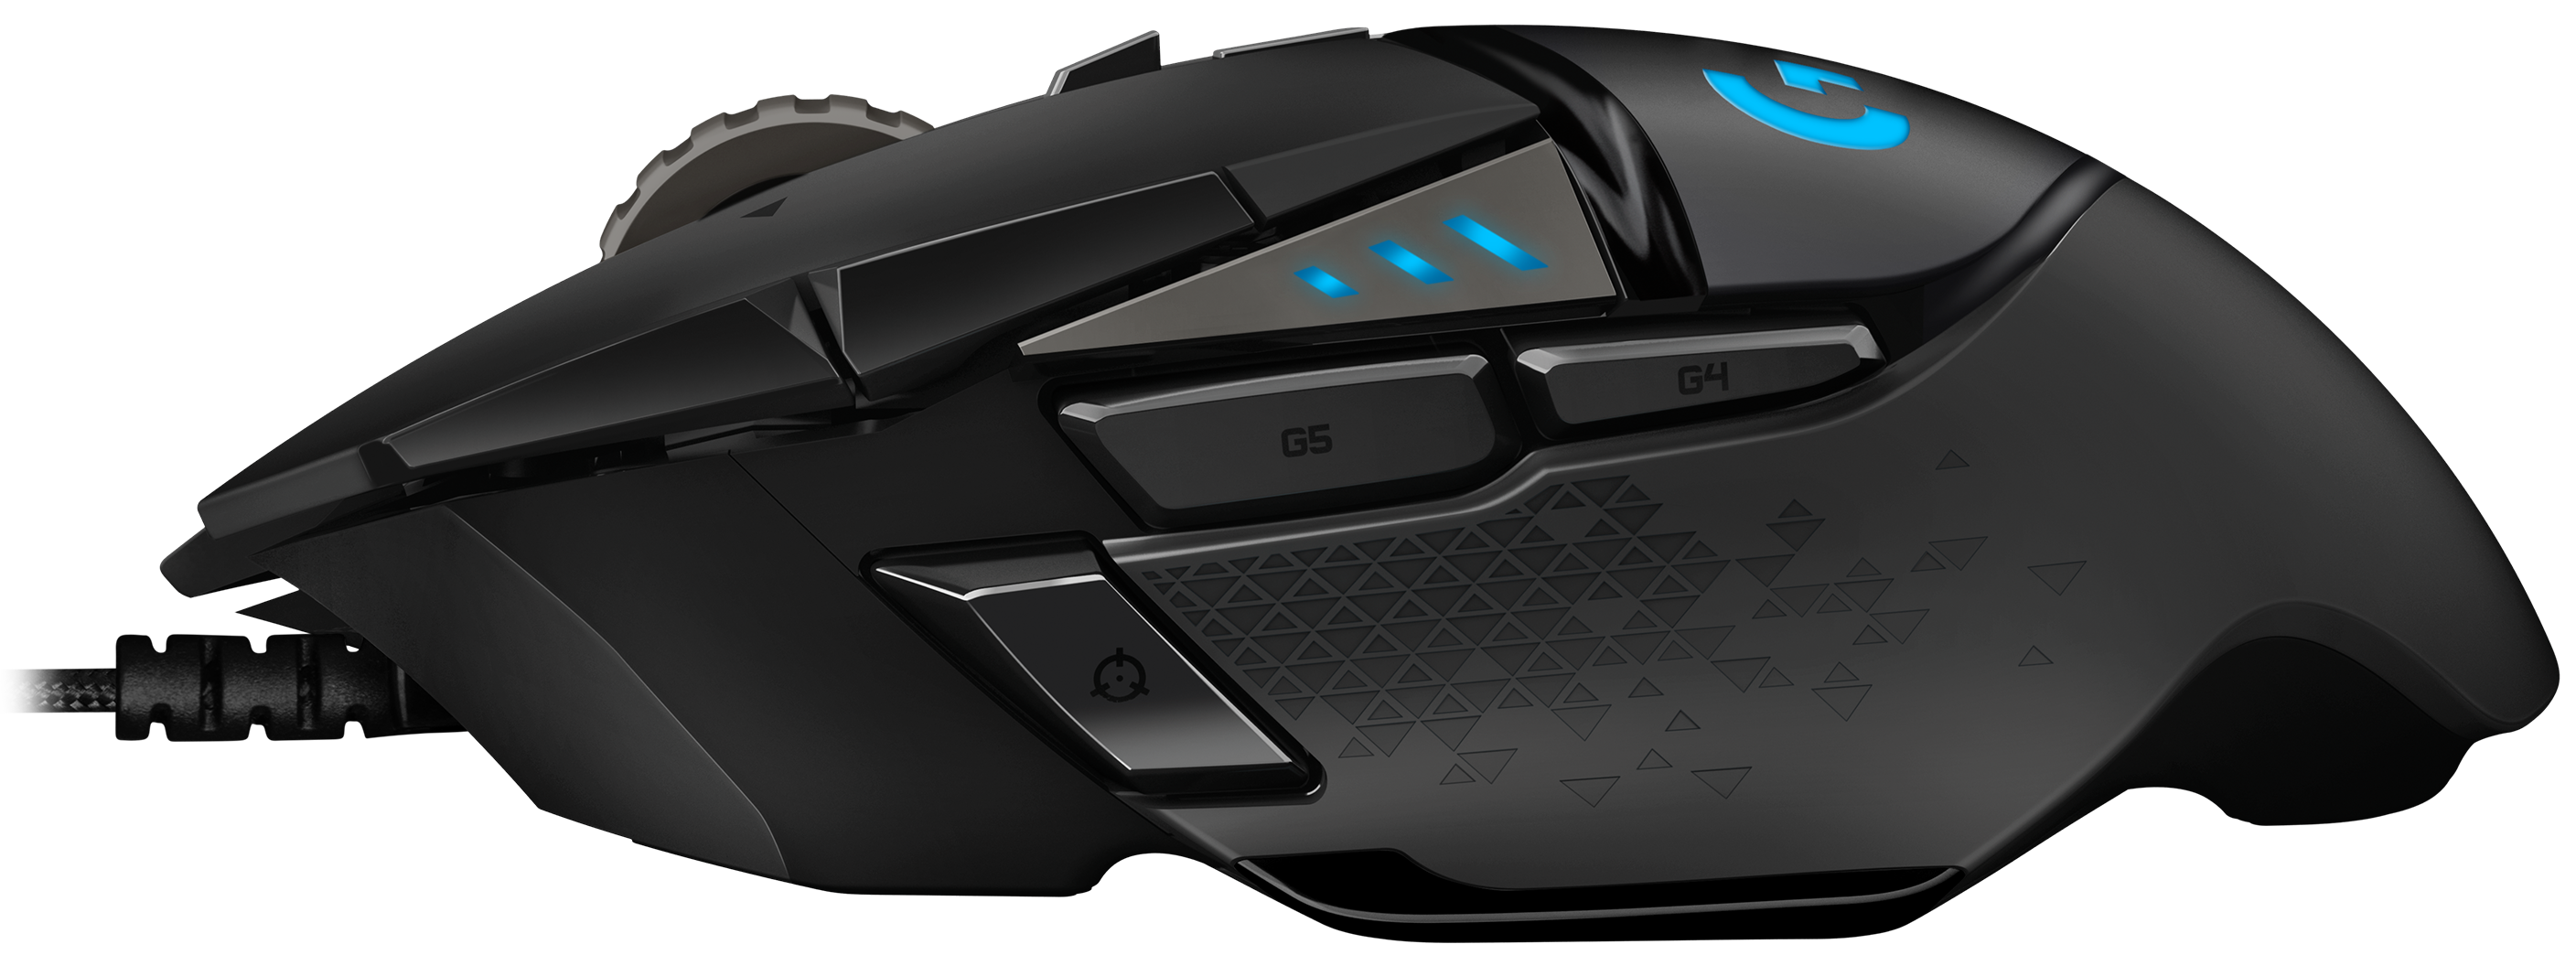 G502 HERO ハイパフォーマンス ゲーミング マウス